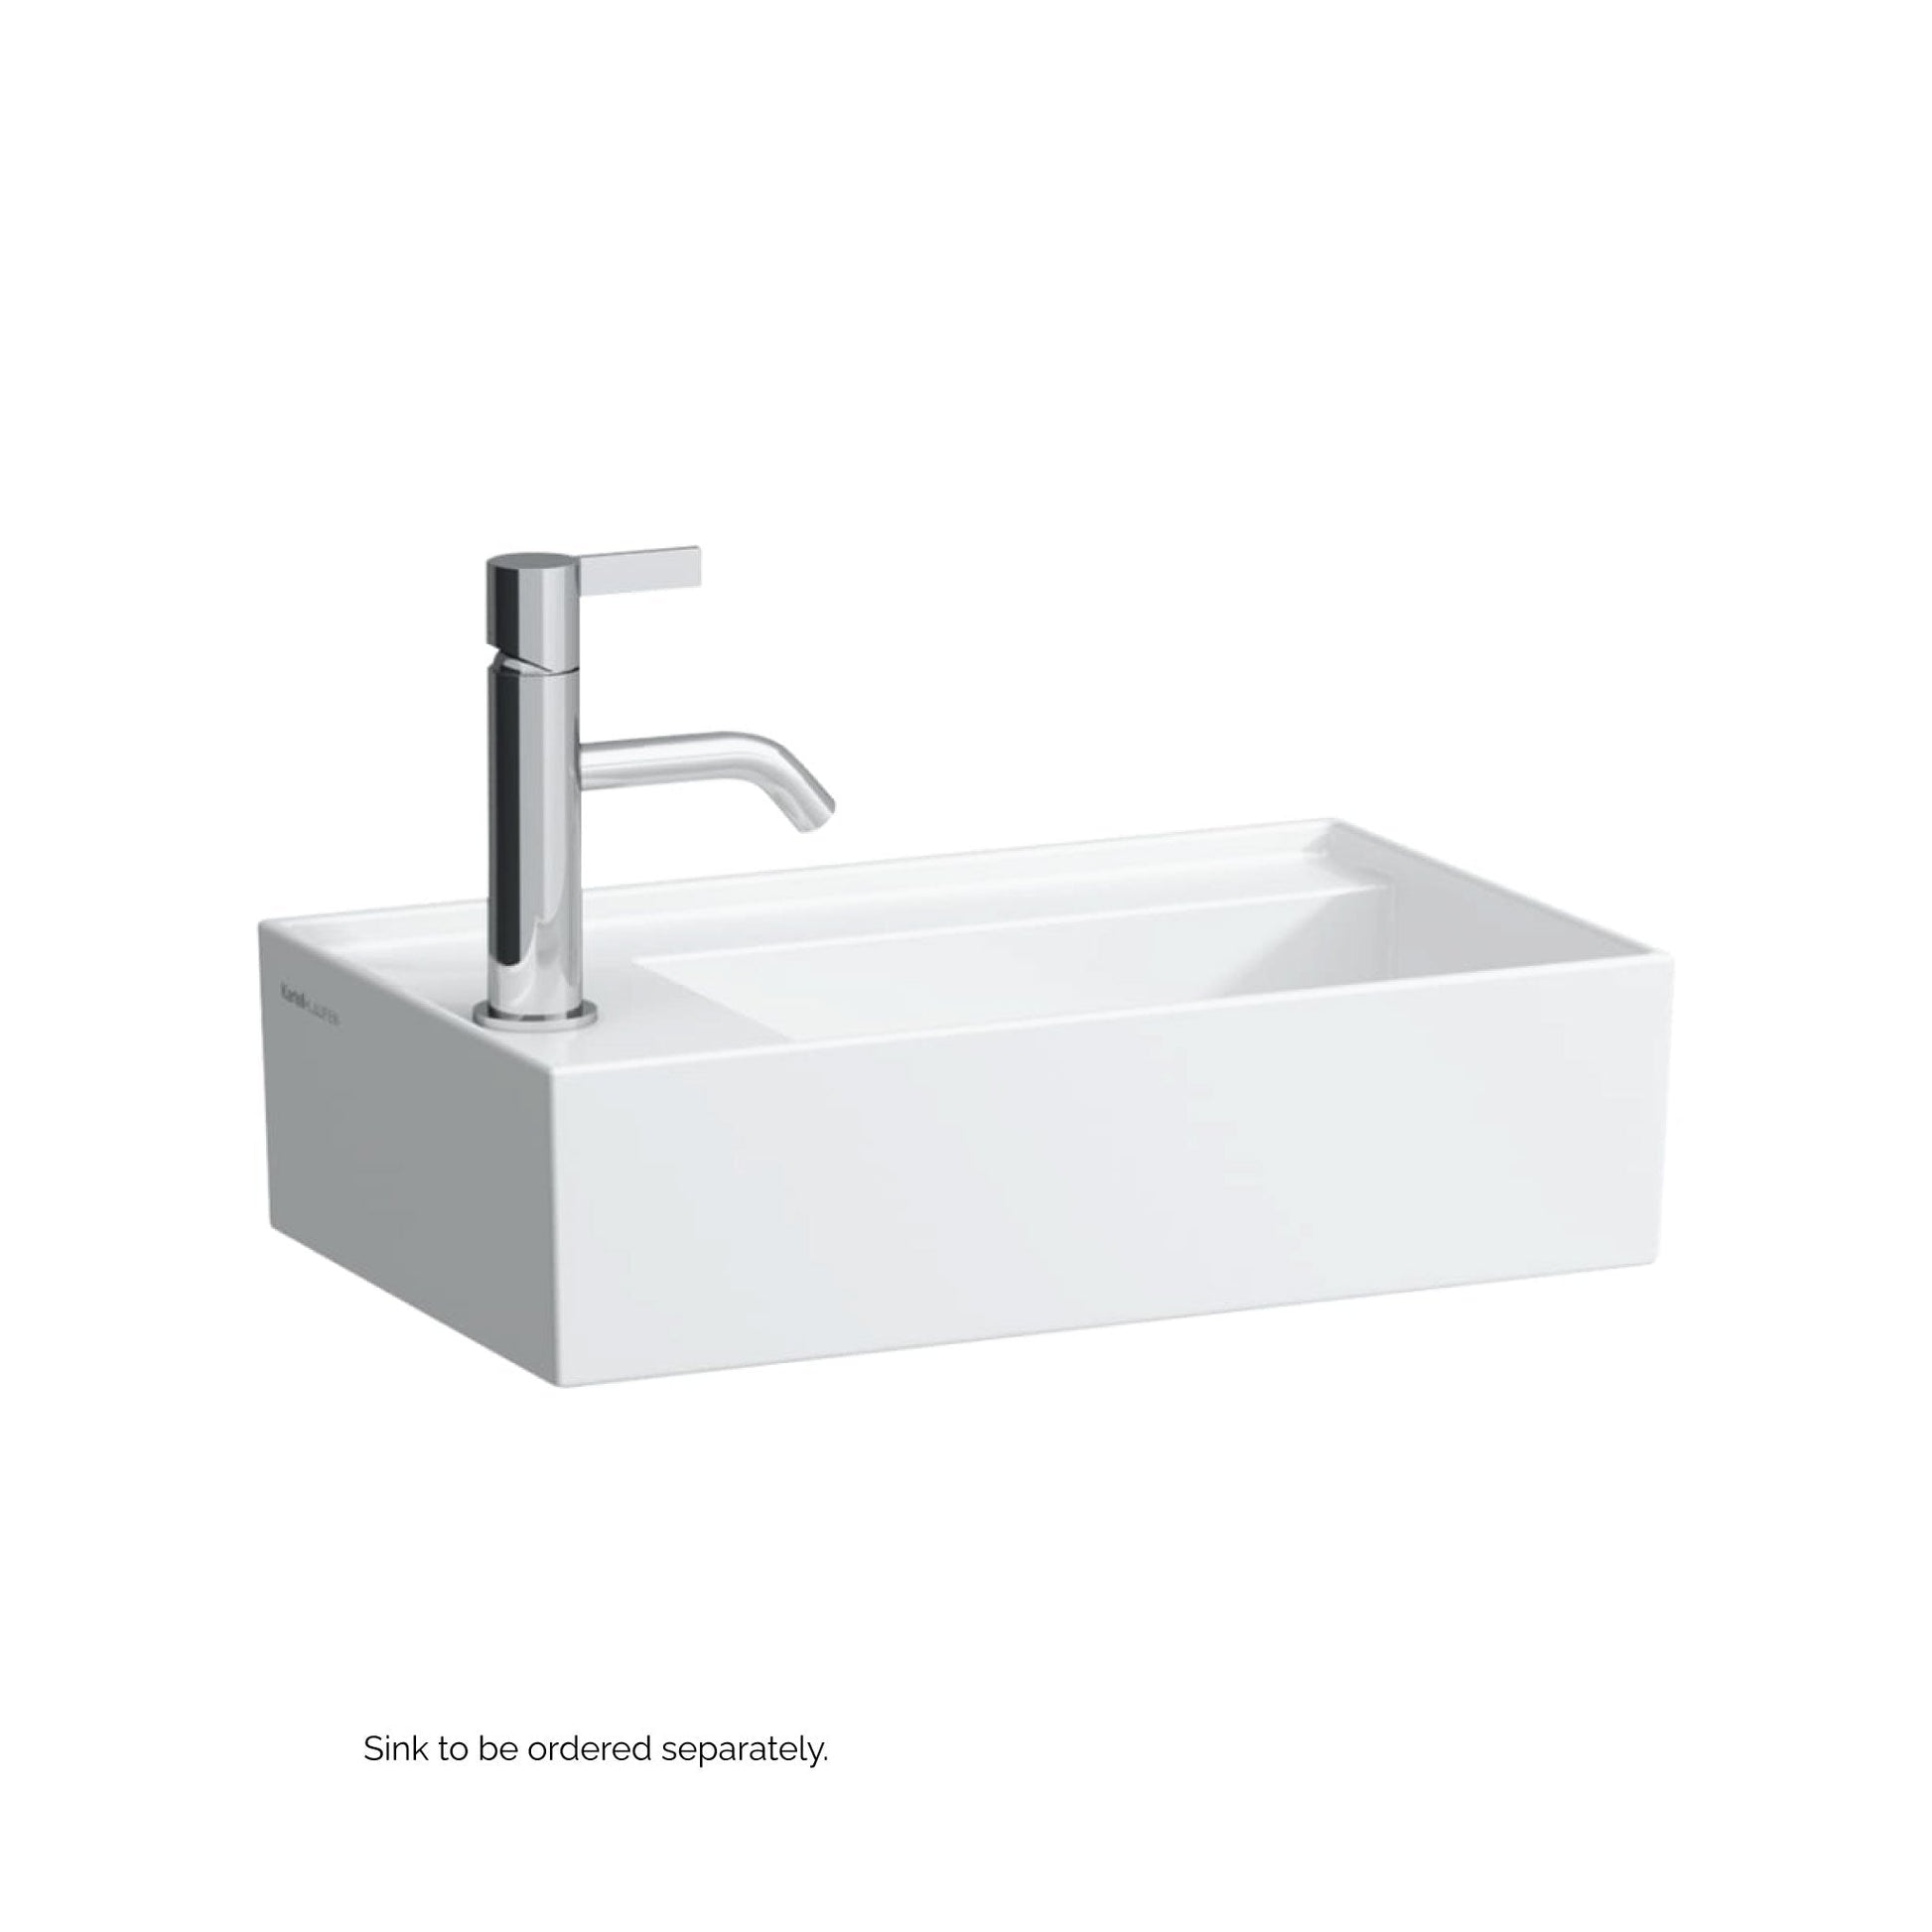 Laufen Kartell 8" Single-Hole Chrome Fixed-Spout Bathroom Sink Faucet